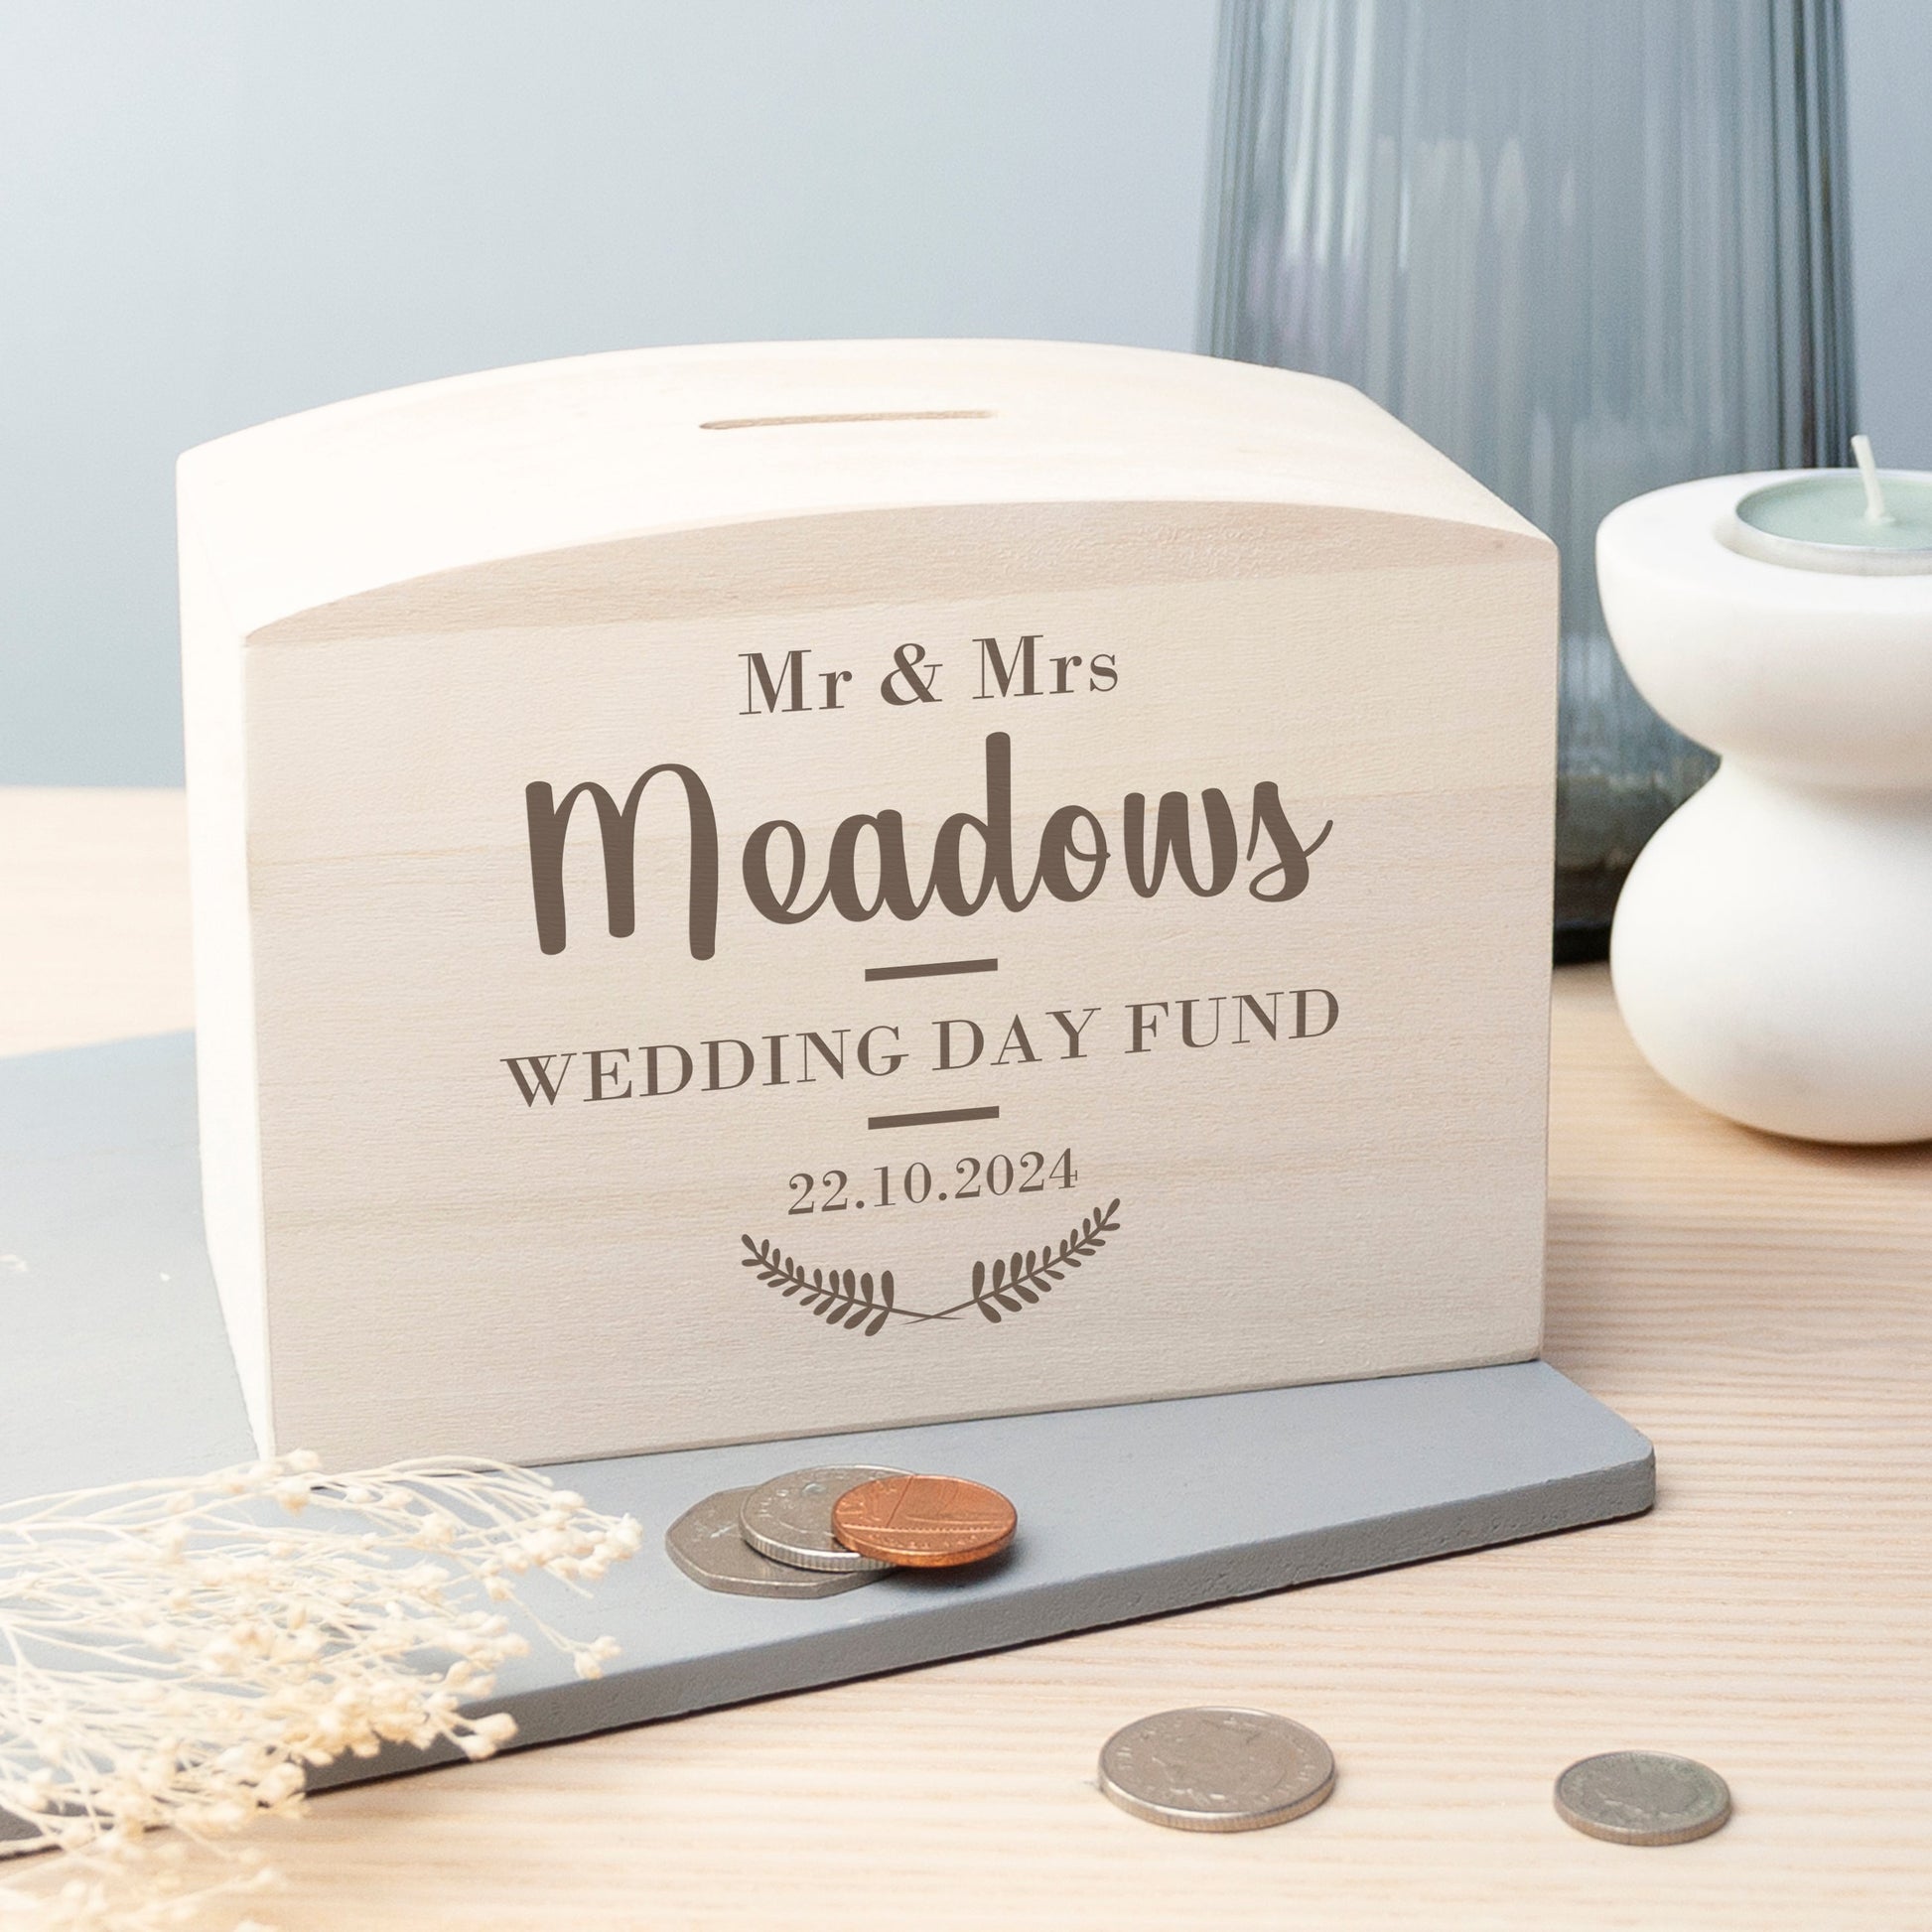 Personalized Money Boxes - Personalized Wedding Day Money Box 